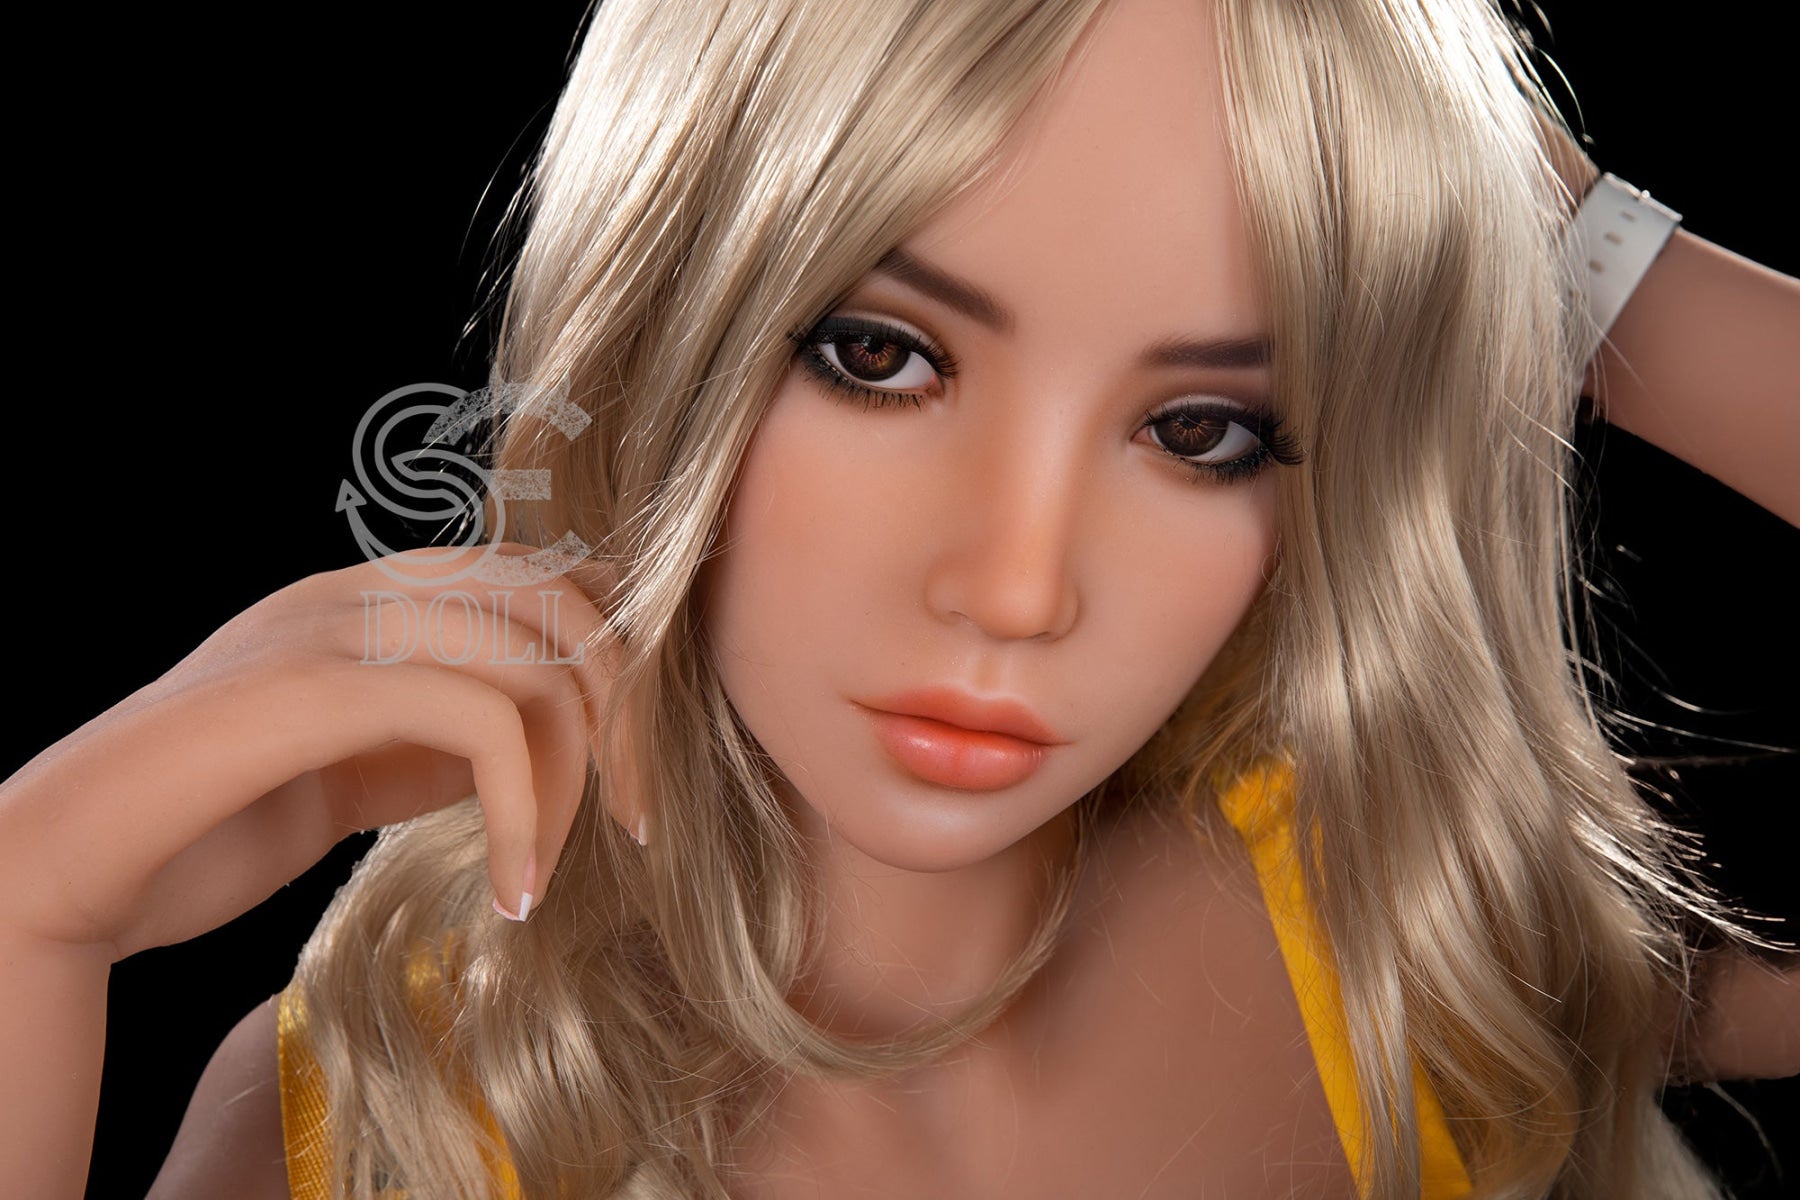 Jenny Life Size Love Doll - SEDOLL® - EU STOCK SE Doll